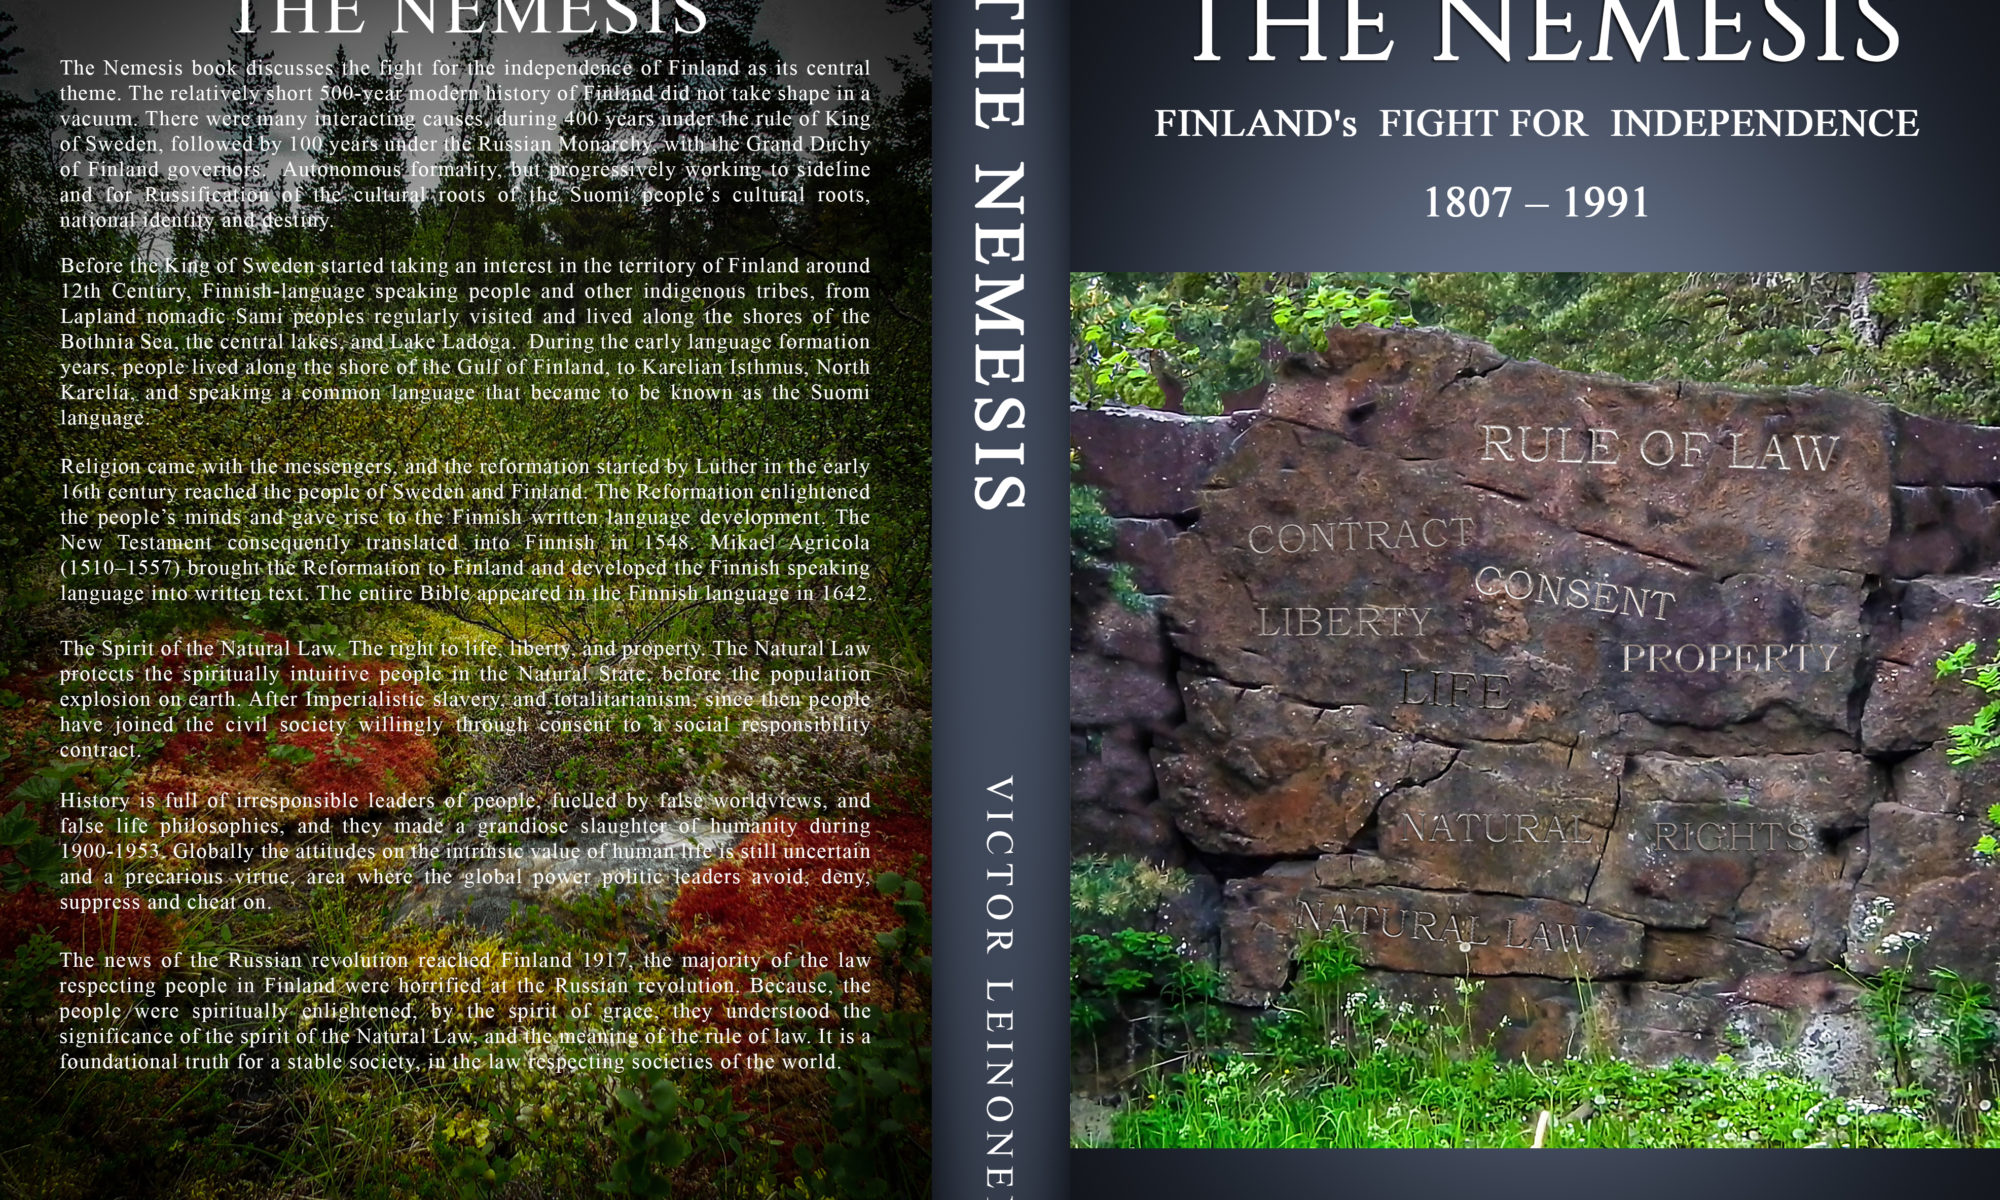 The Nemesis website